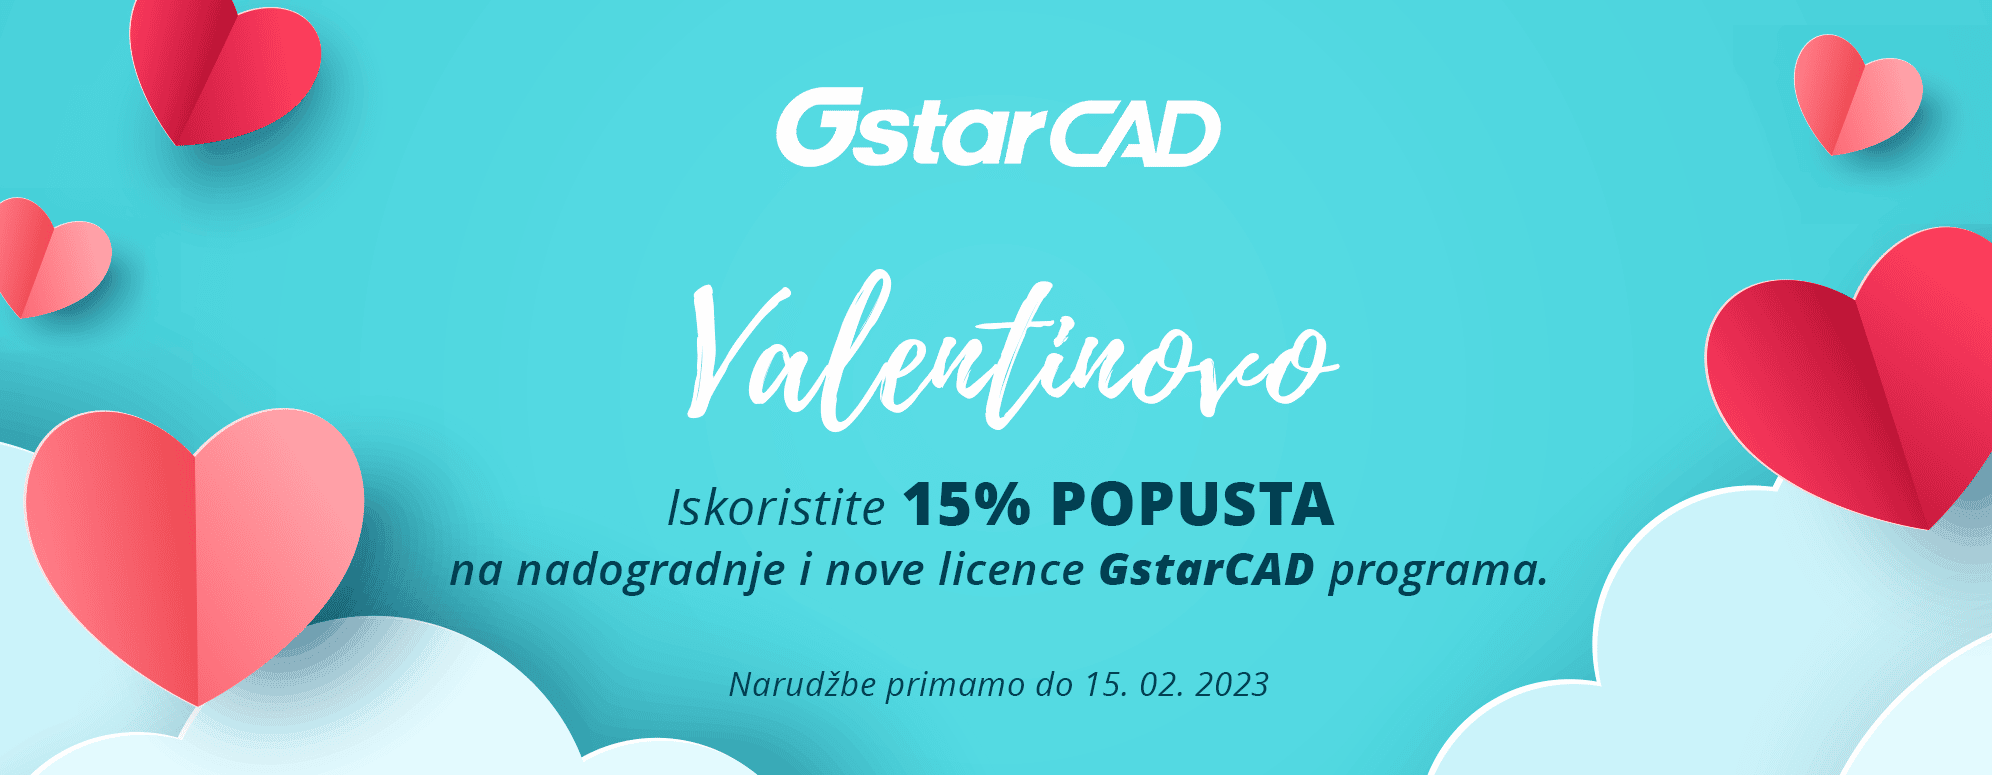 Gstarcad - Valentinovo Promocija 2023